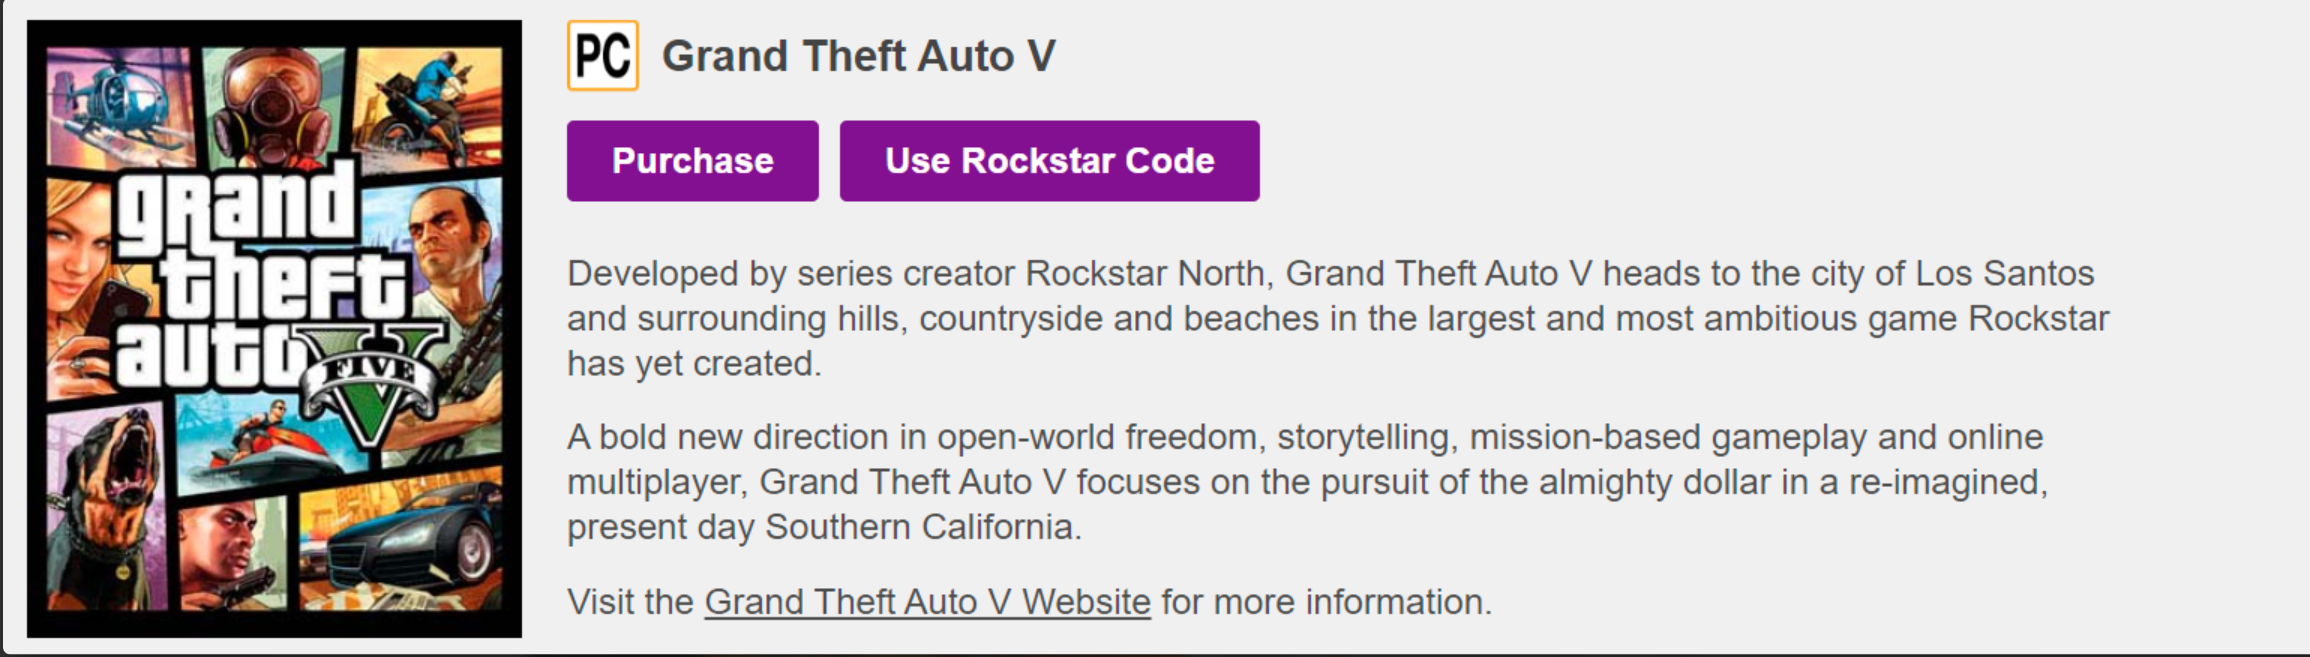 Rockstar games пароли. Код активации Rockstar GTA 5. GTA 4 код активации. Код 1 рокстар. Какой код активации Rockstar для ГТА 5.